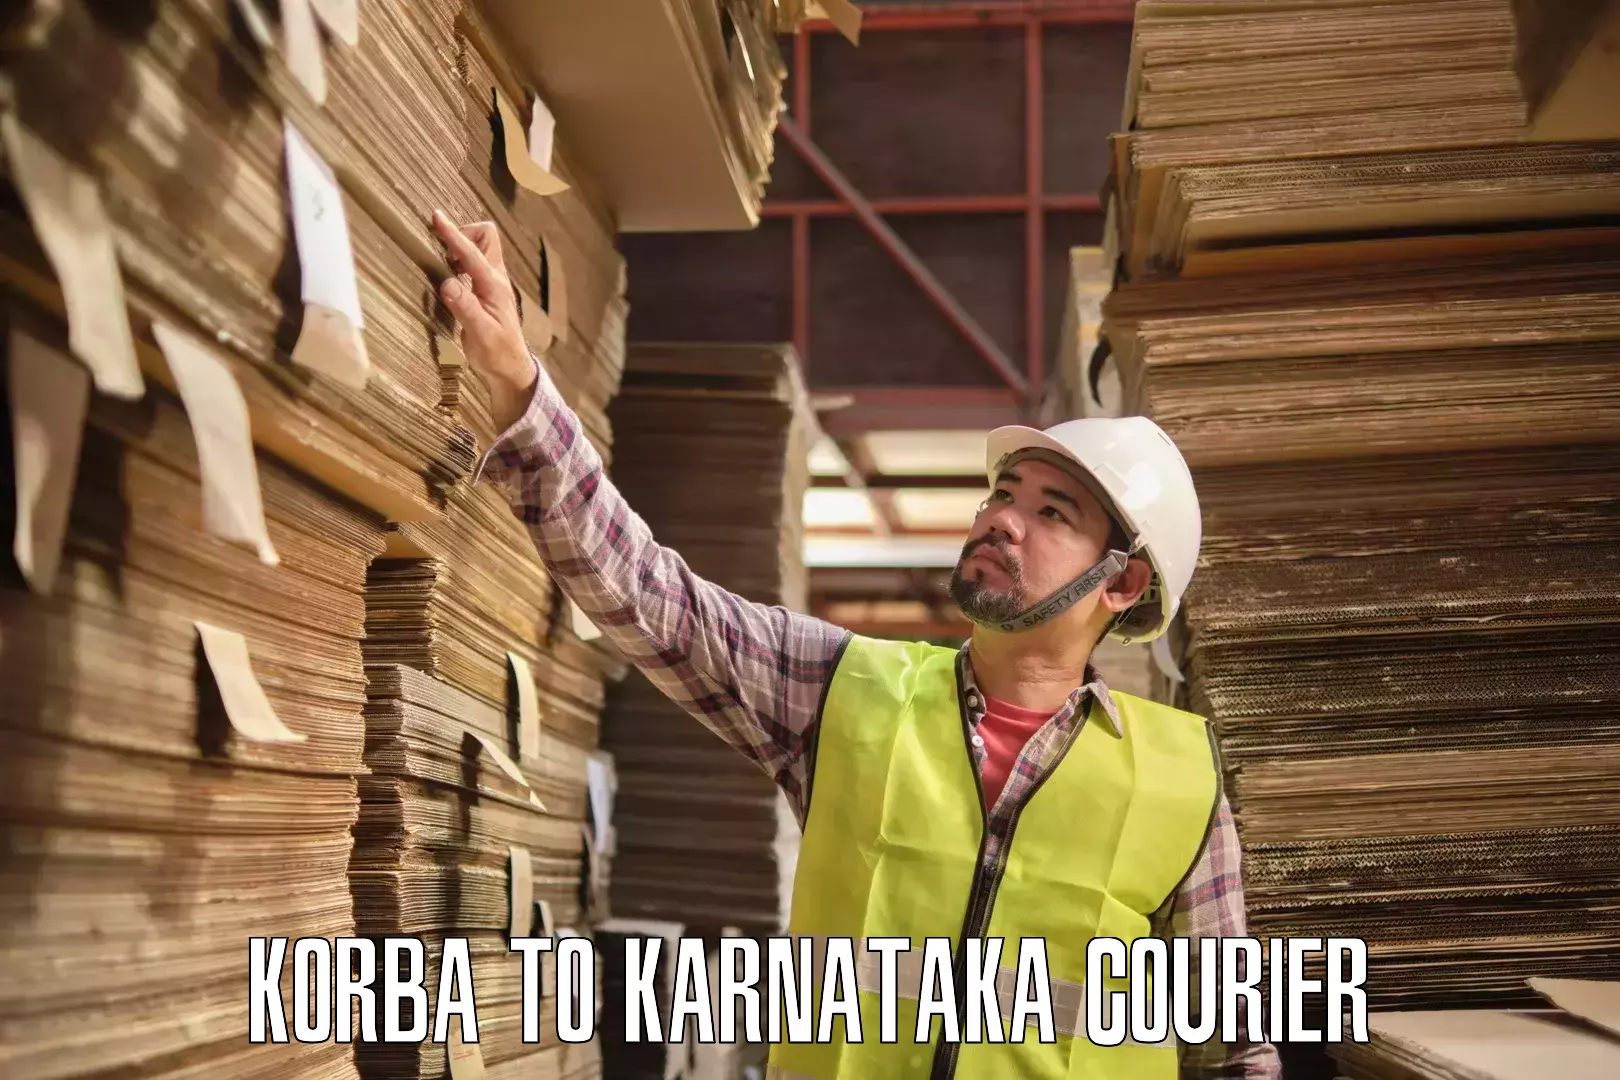 Global shipping networks Korba to Kotturu